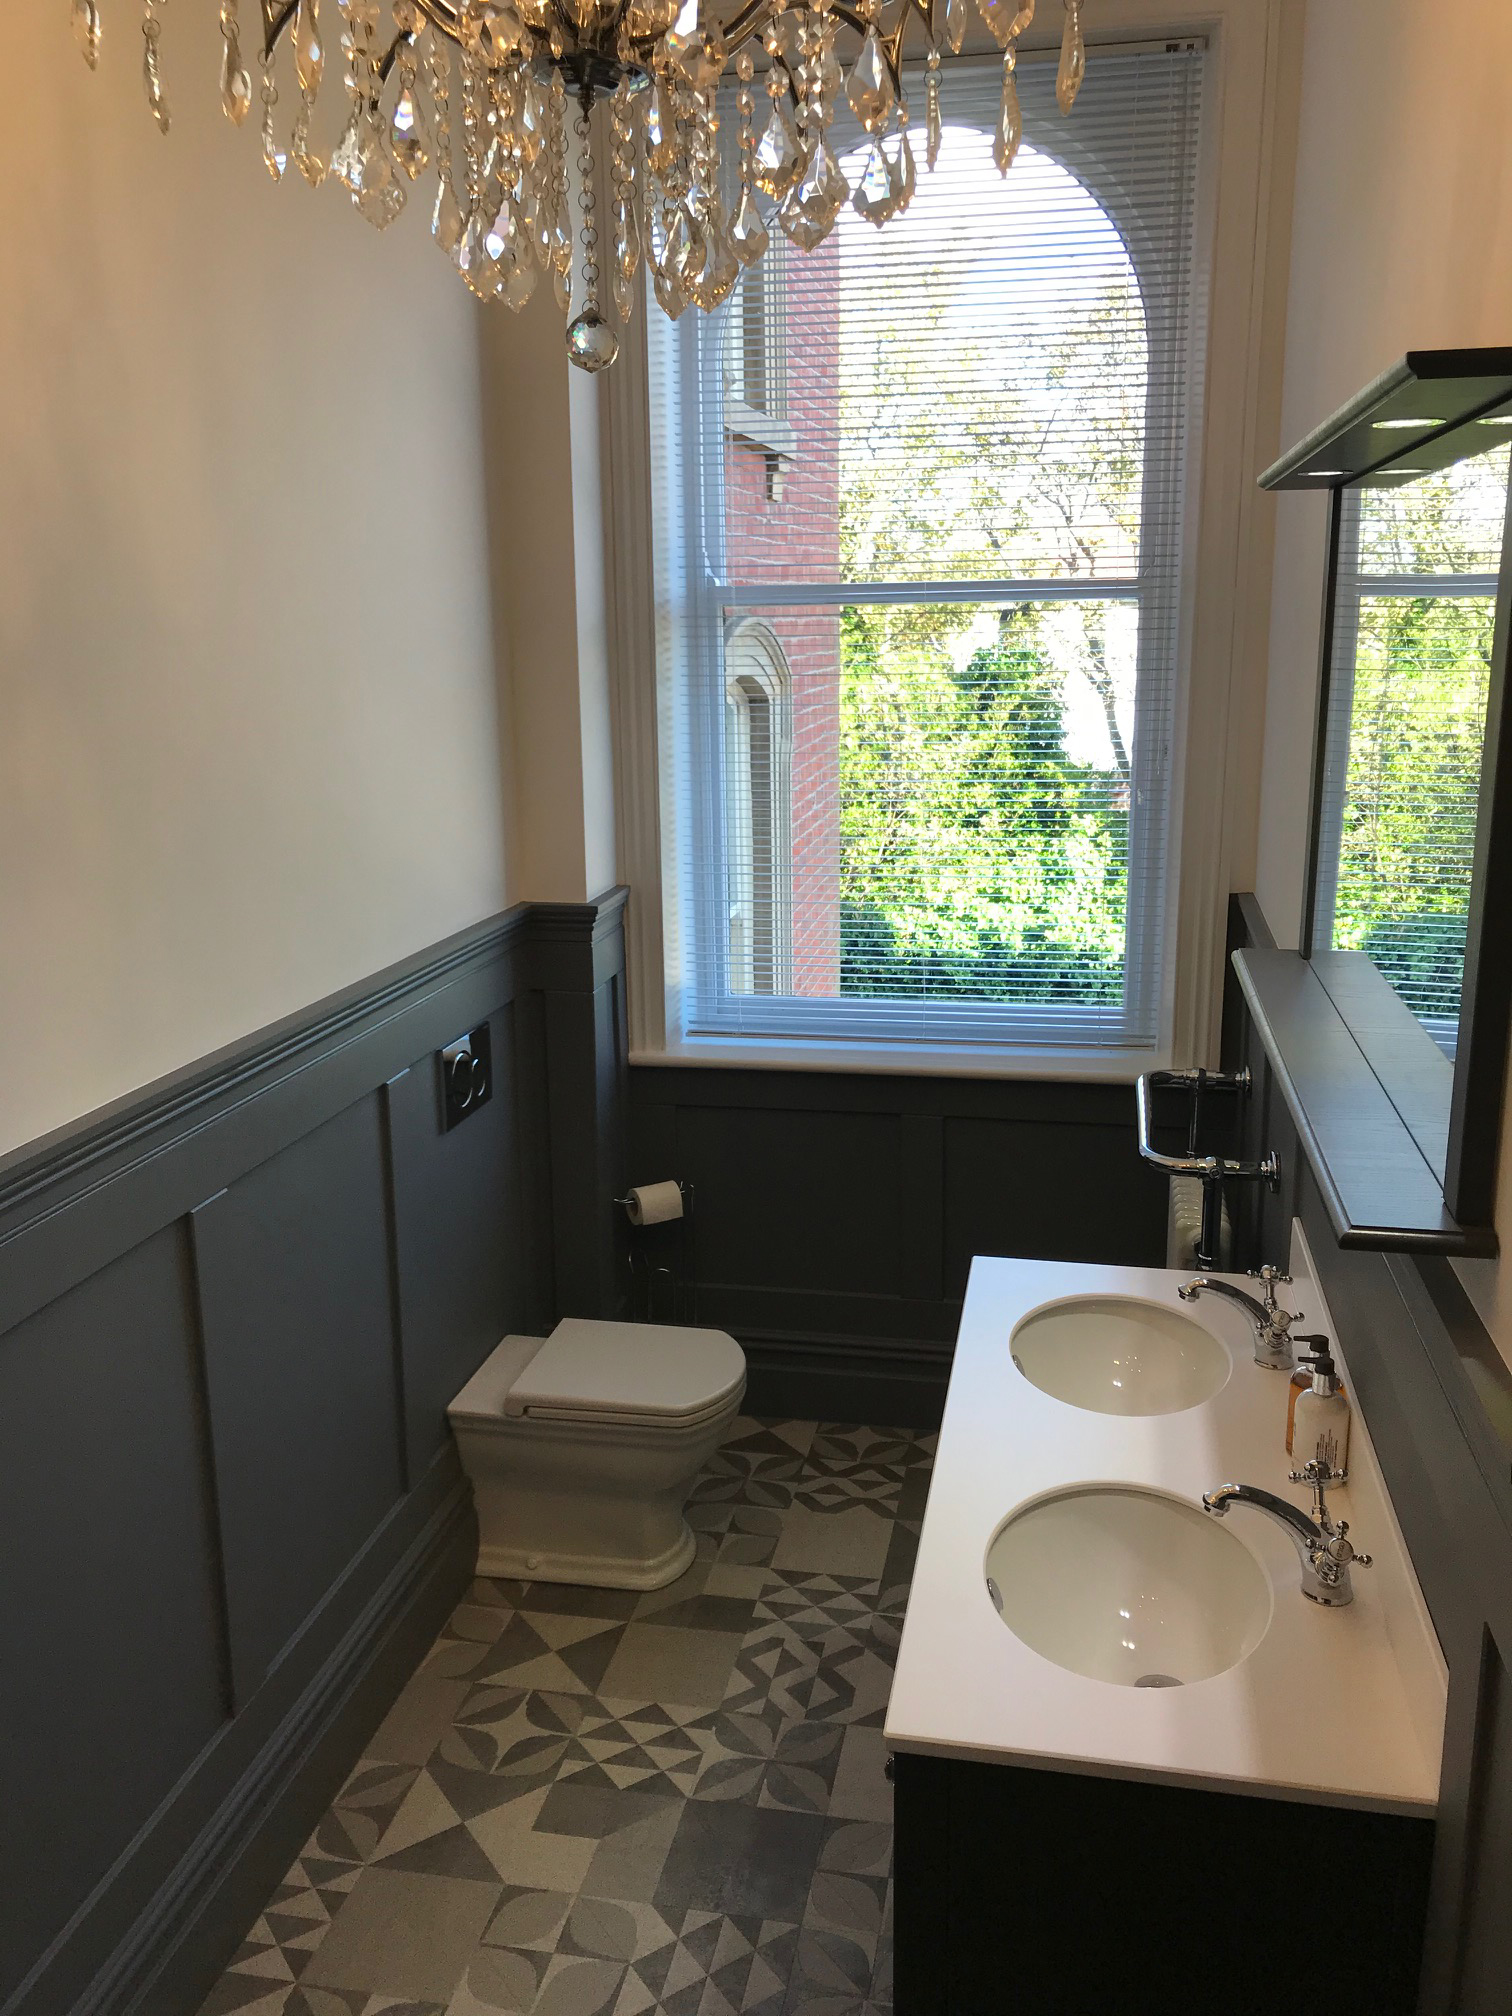 Recent Bathroom/Shower room completed 2019